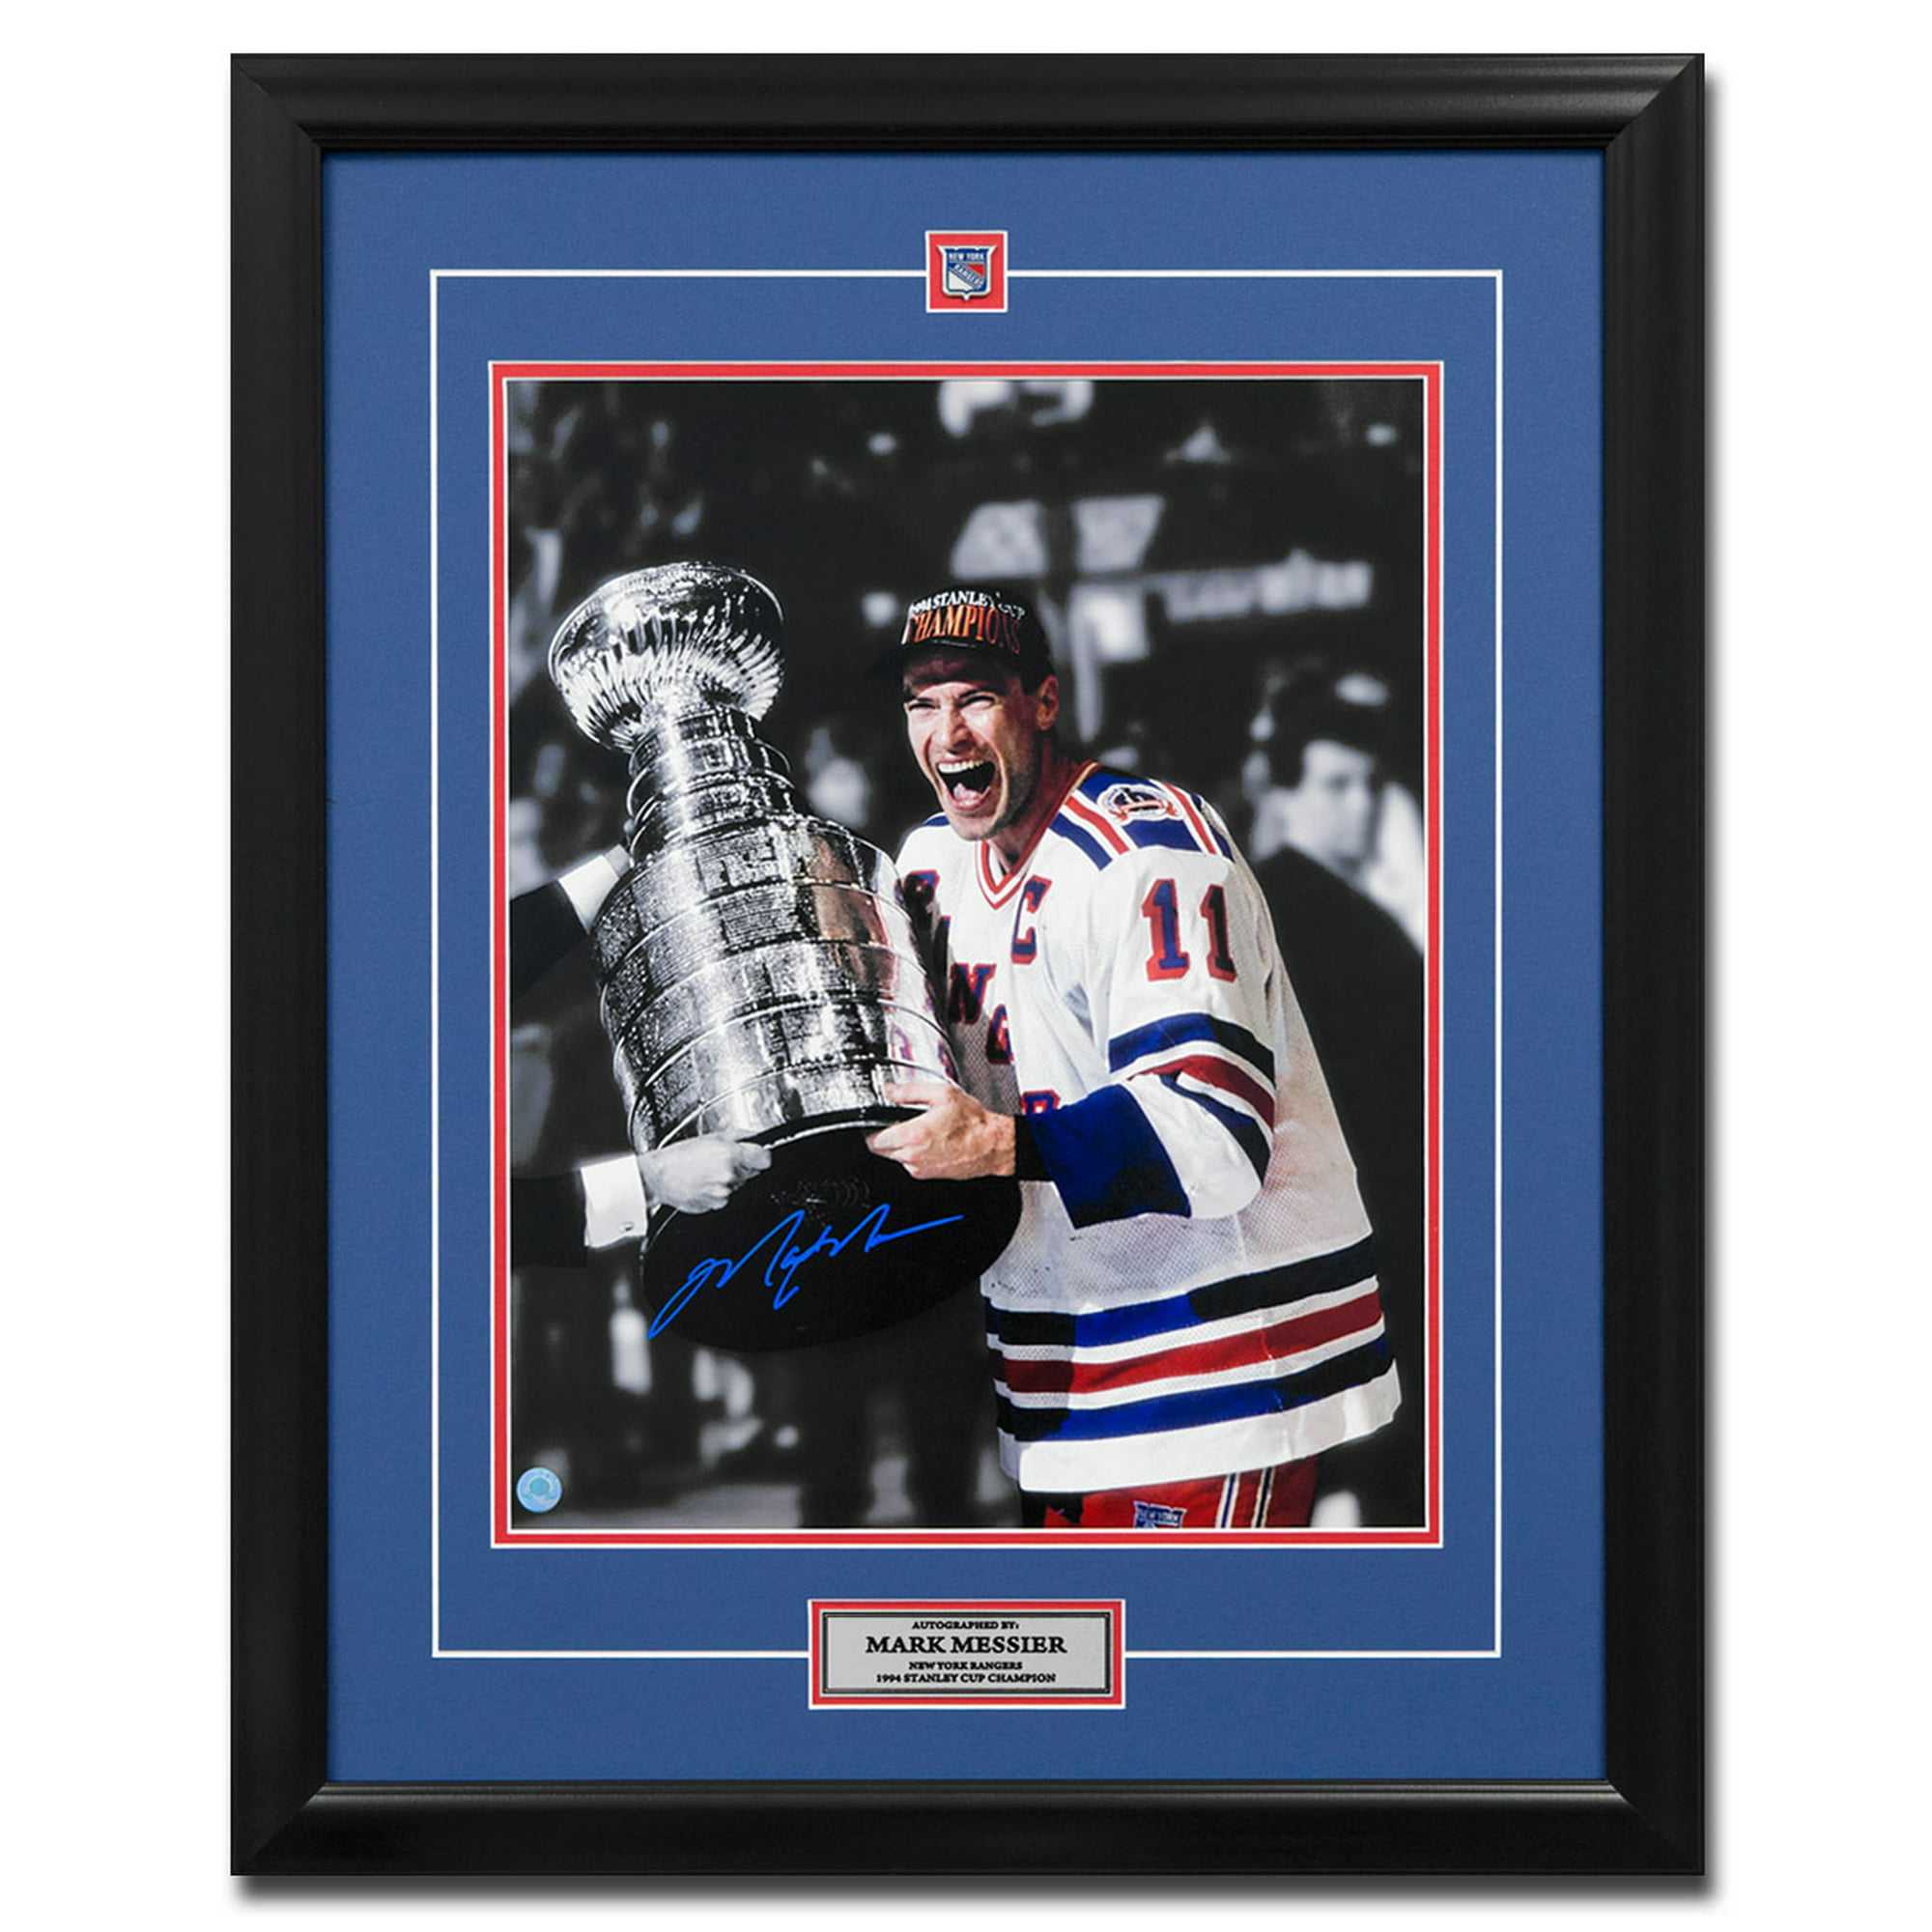 1994 Mark Messier Signed New York Rangers Jersey. Hockey